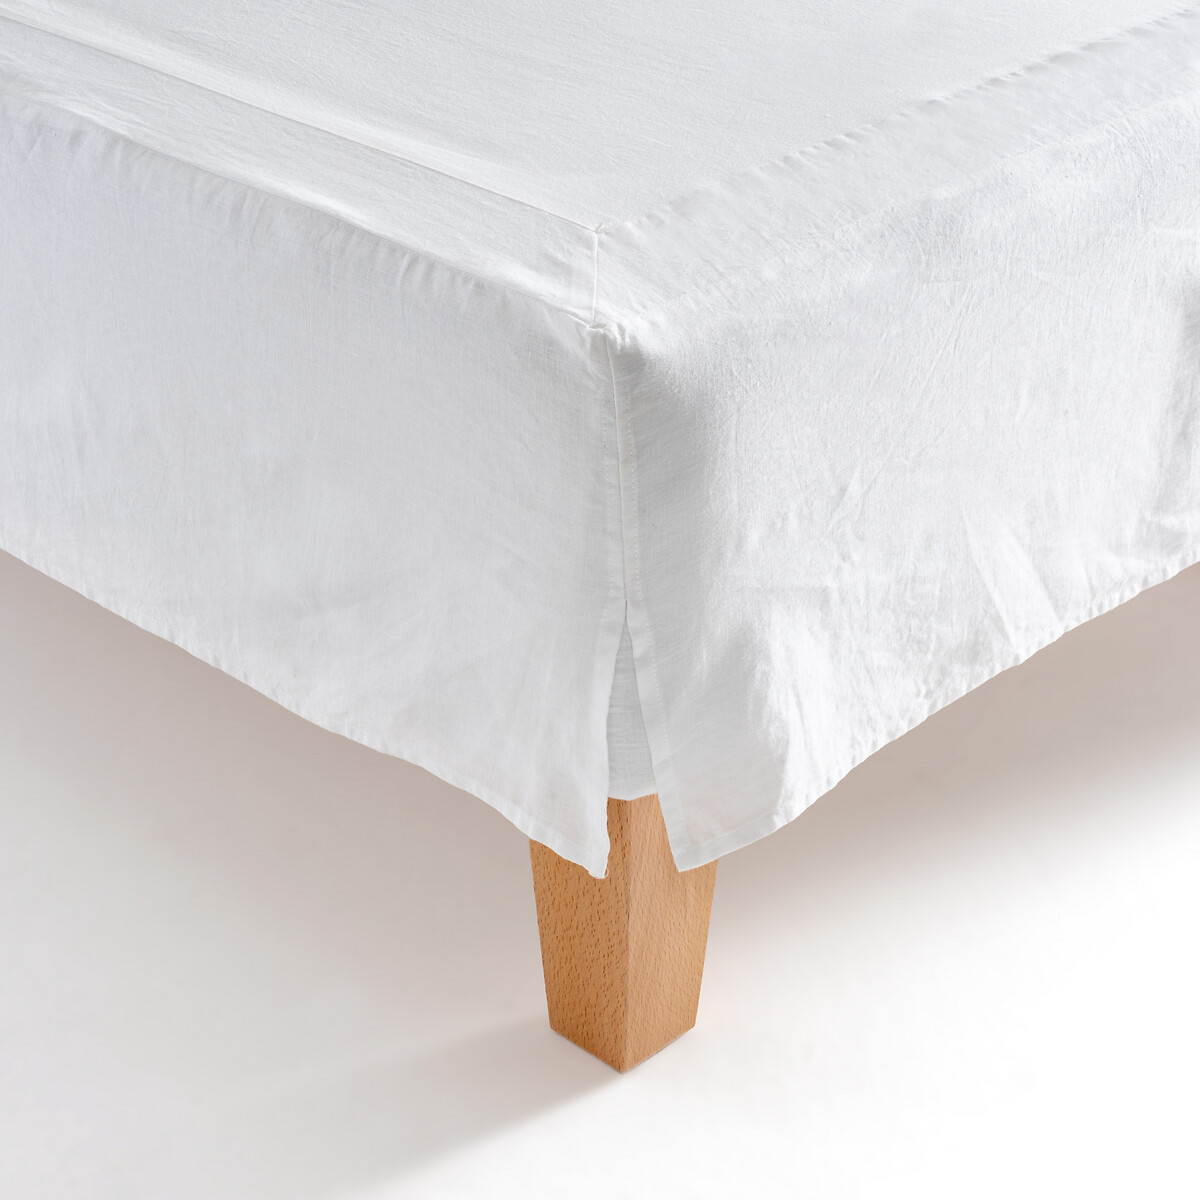 Чехол La Redoute Для кровати  льна 180 x 200 см белый, размер 180 x 200 см